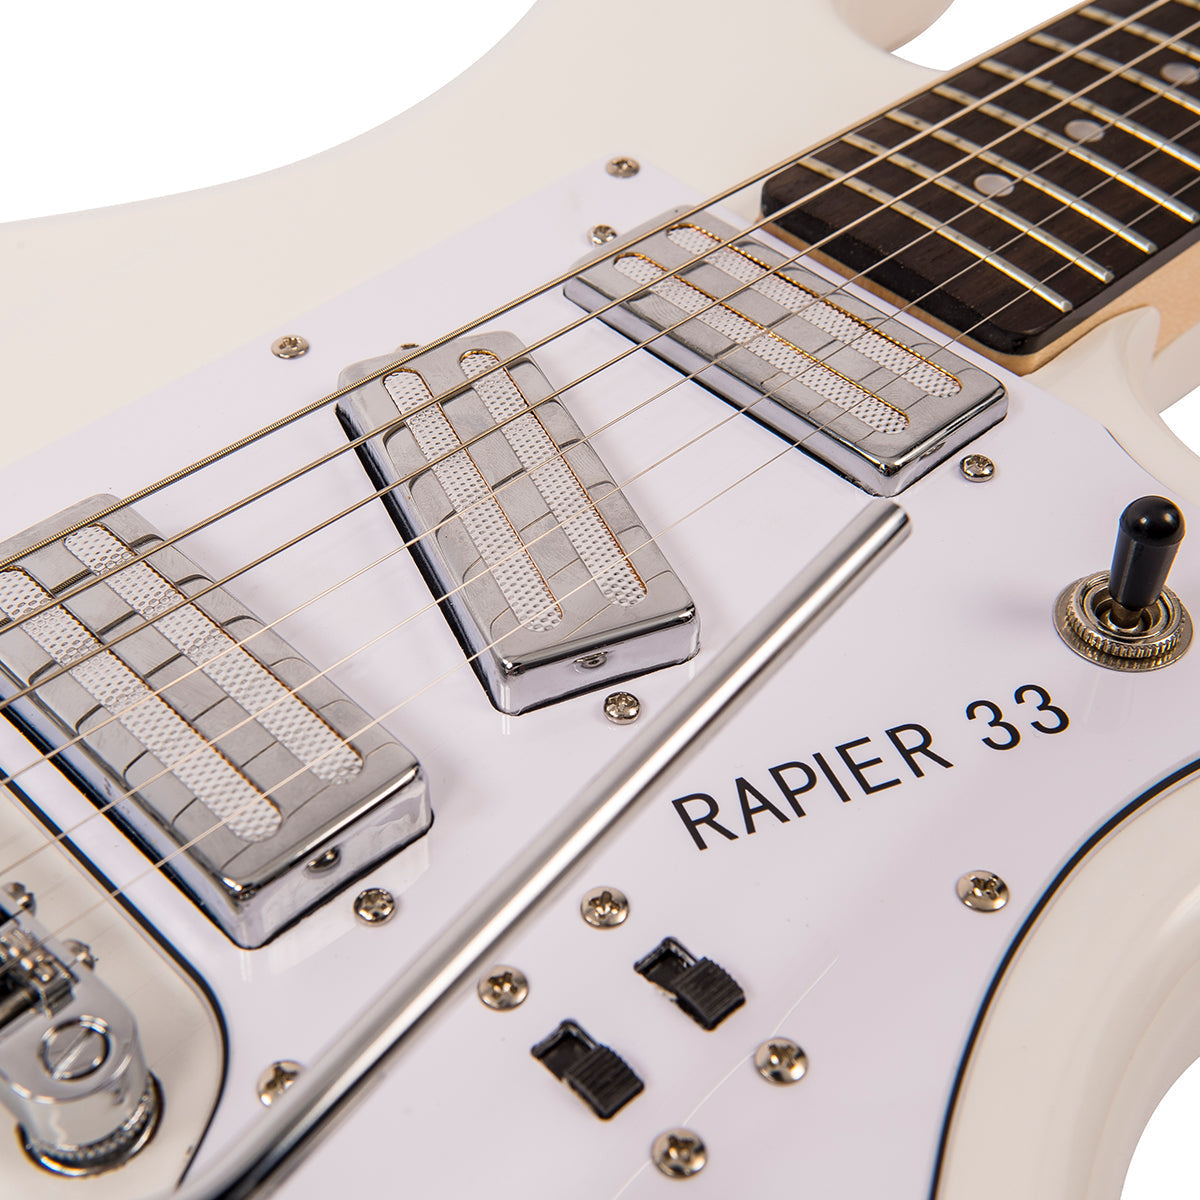 Rapier 33 Electric Guitar ~ Artic White, Electric Guitar for sale at Richards Guitars.